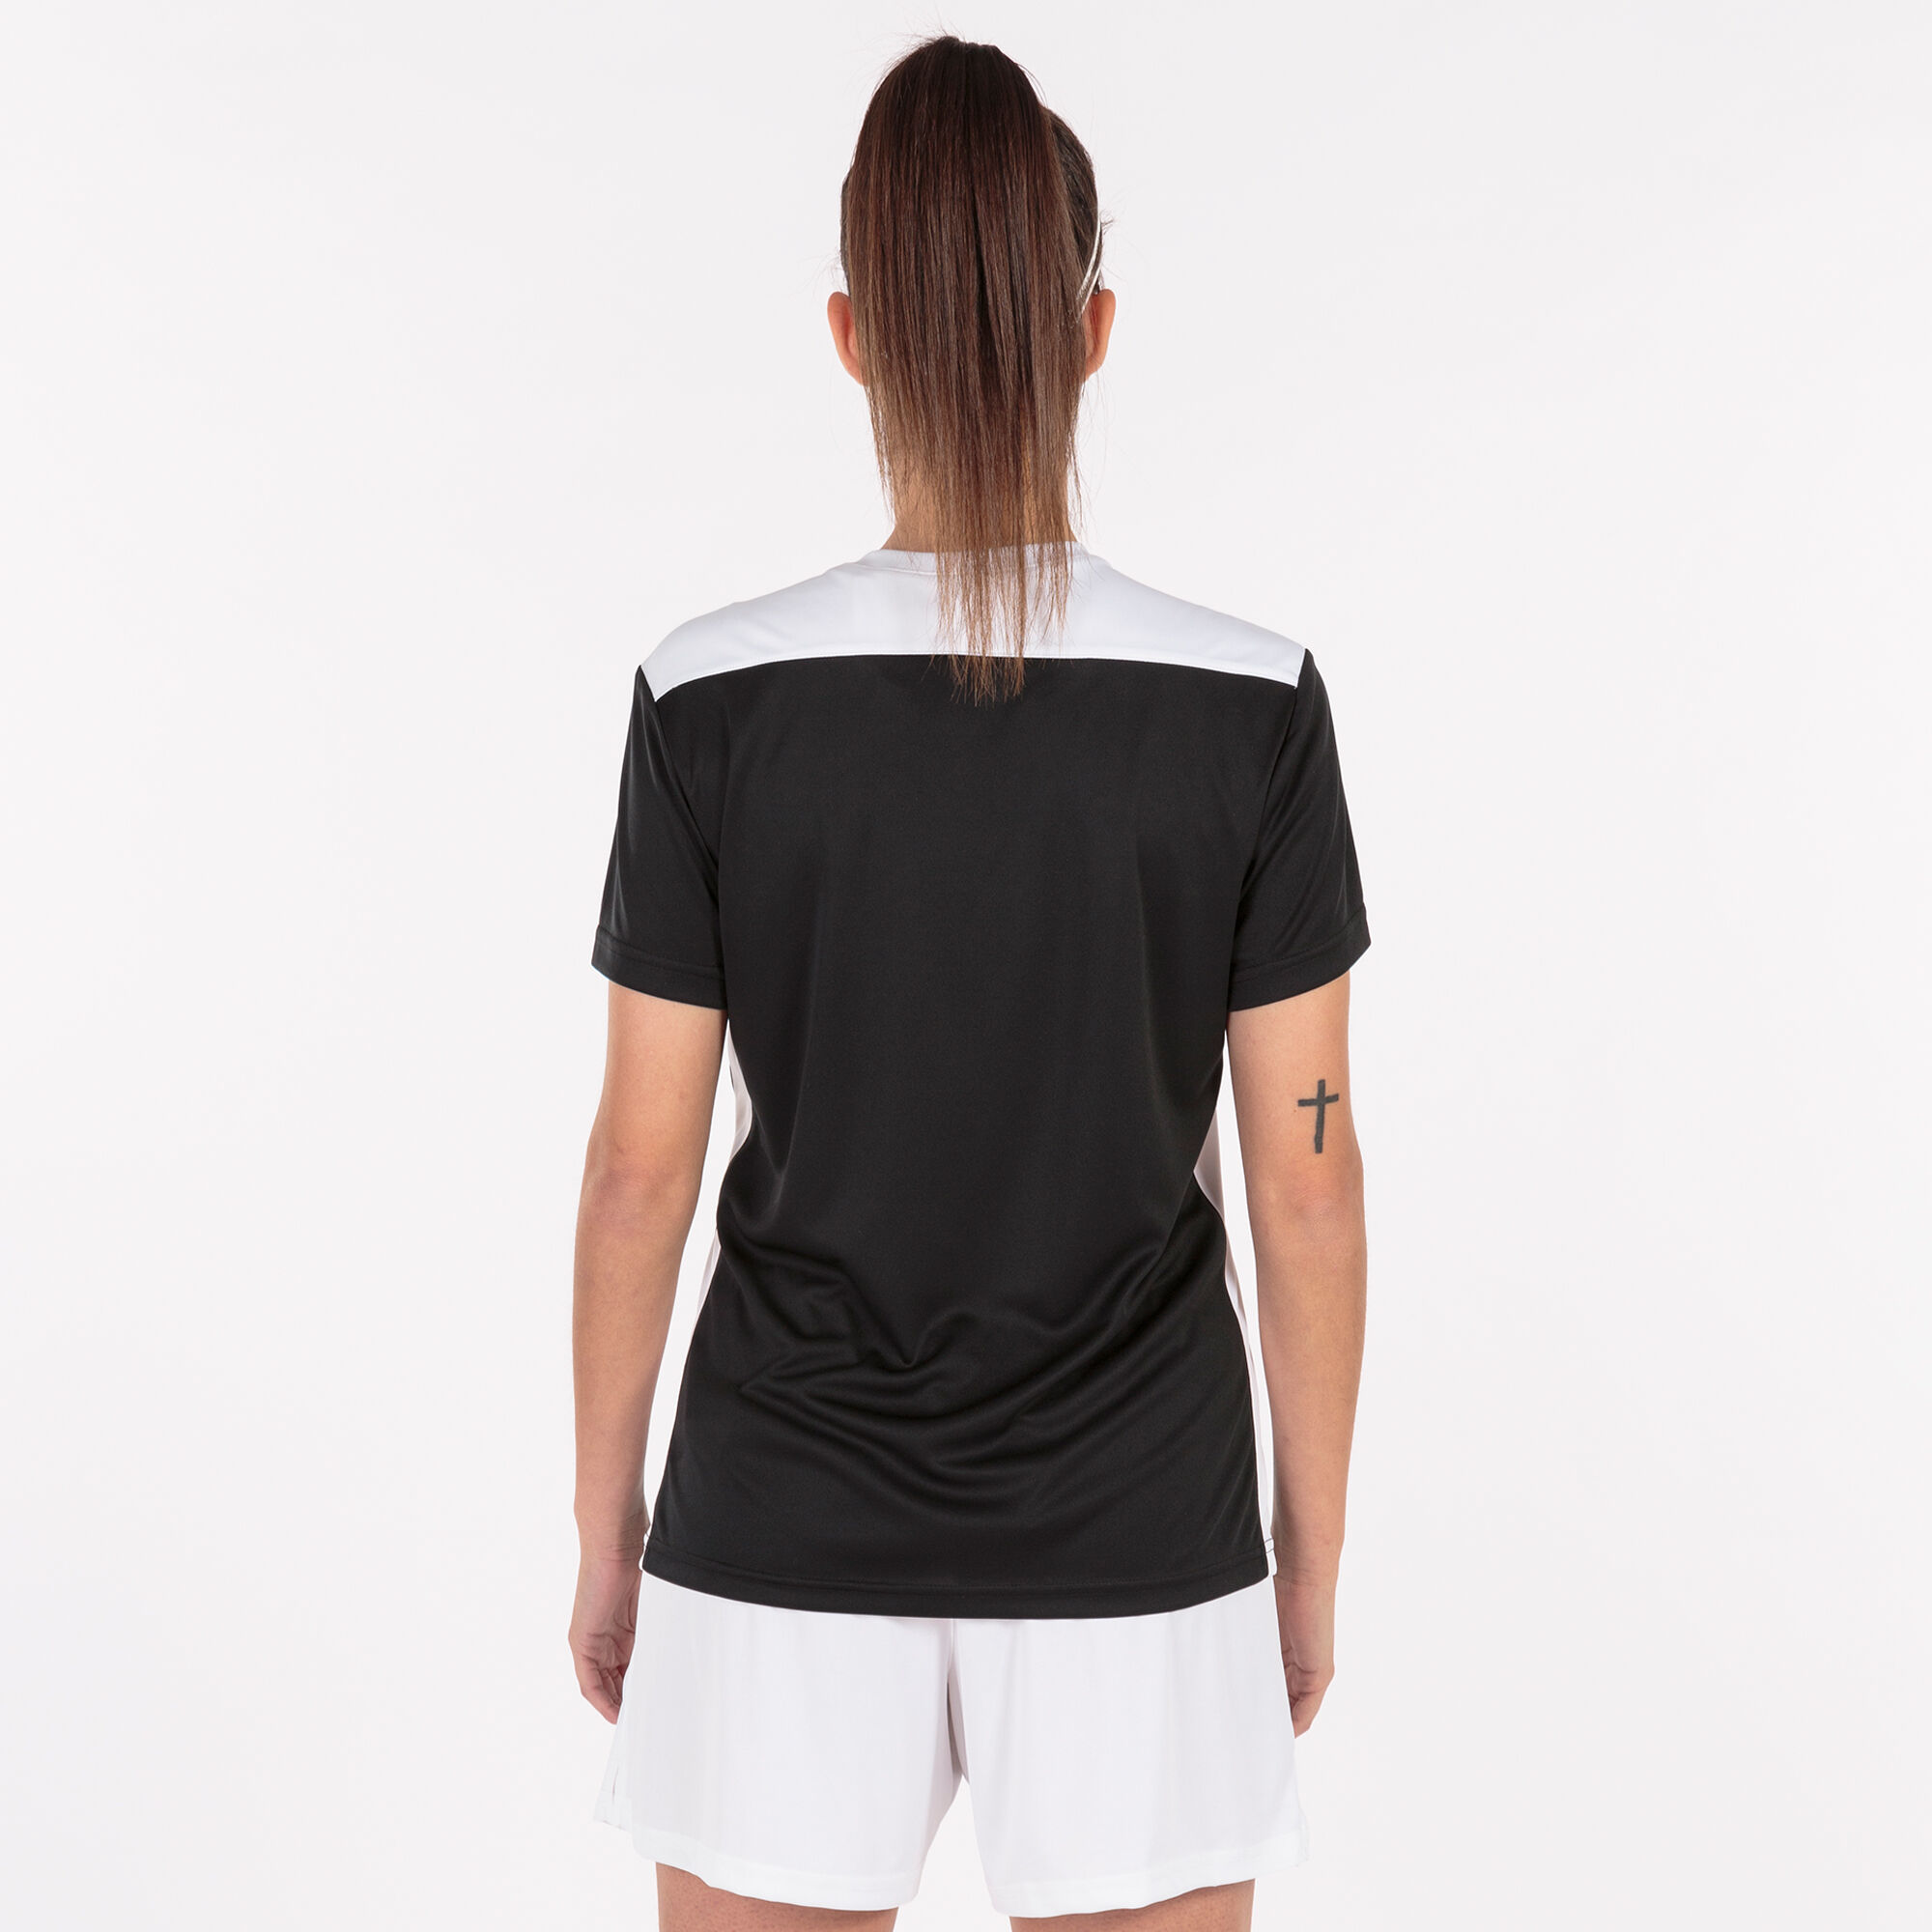 Camiseta manga corta mujer Championship VI negro blanco